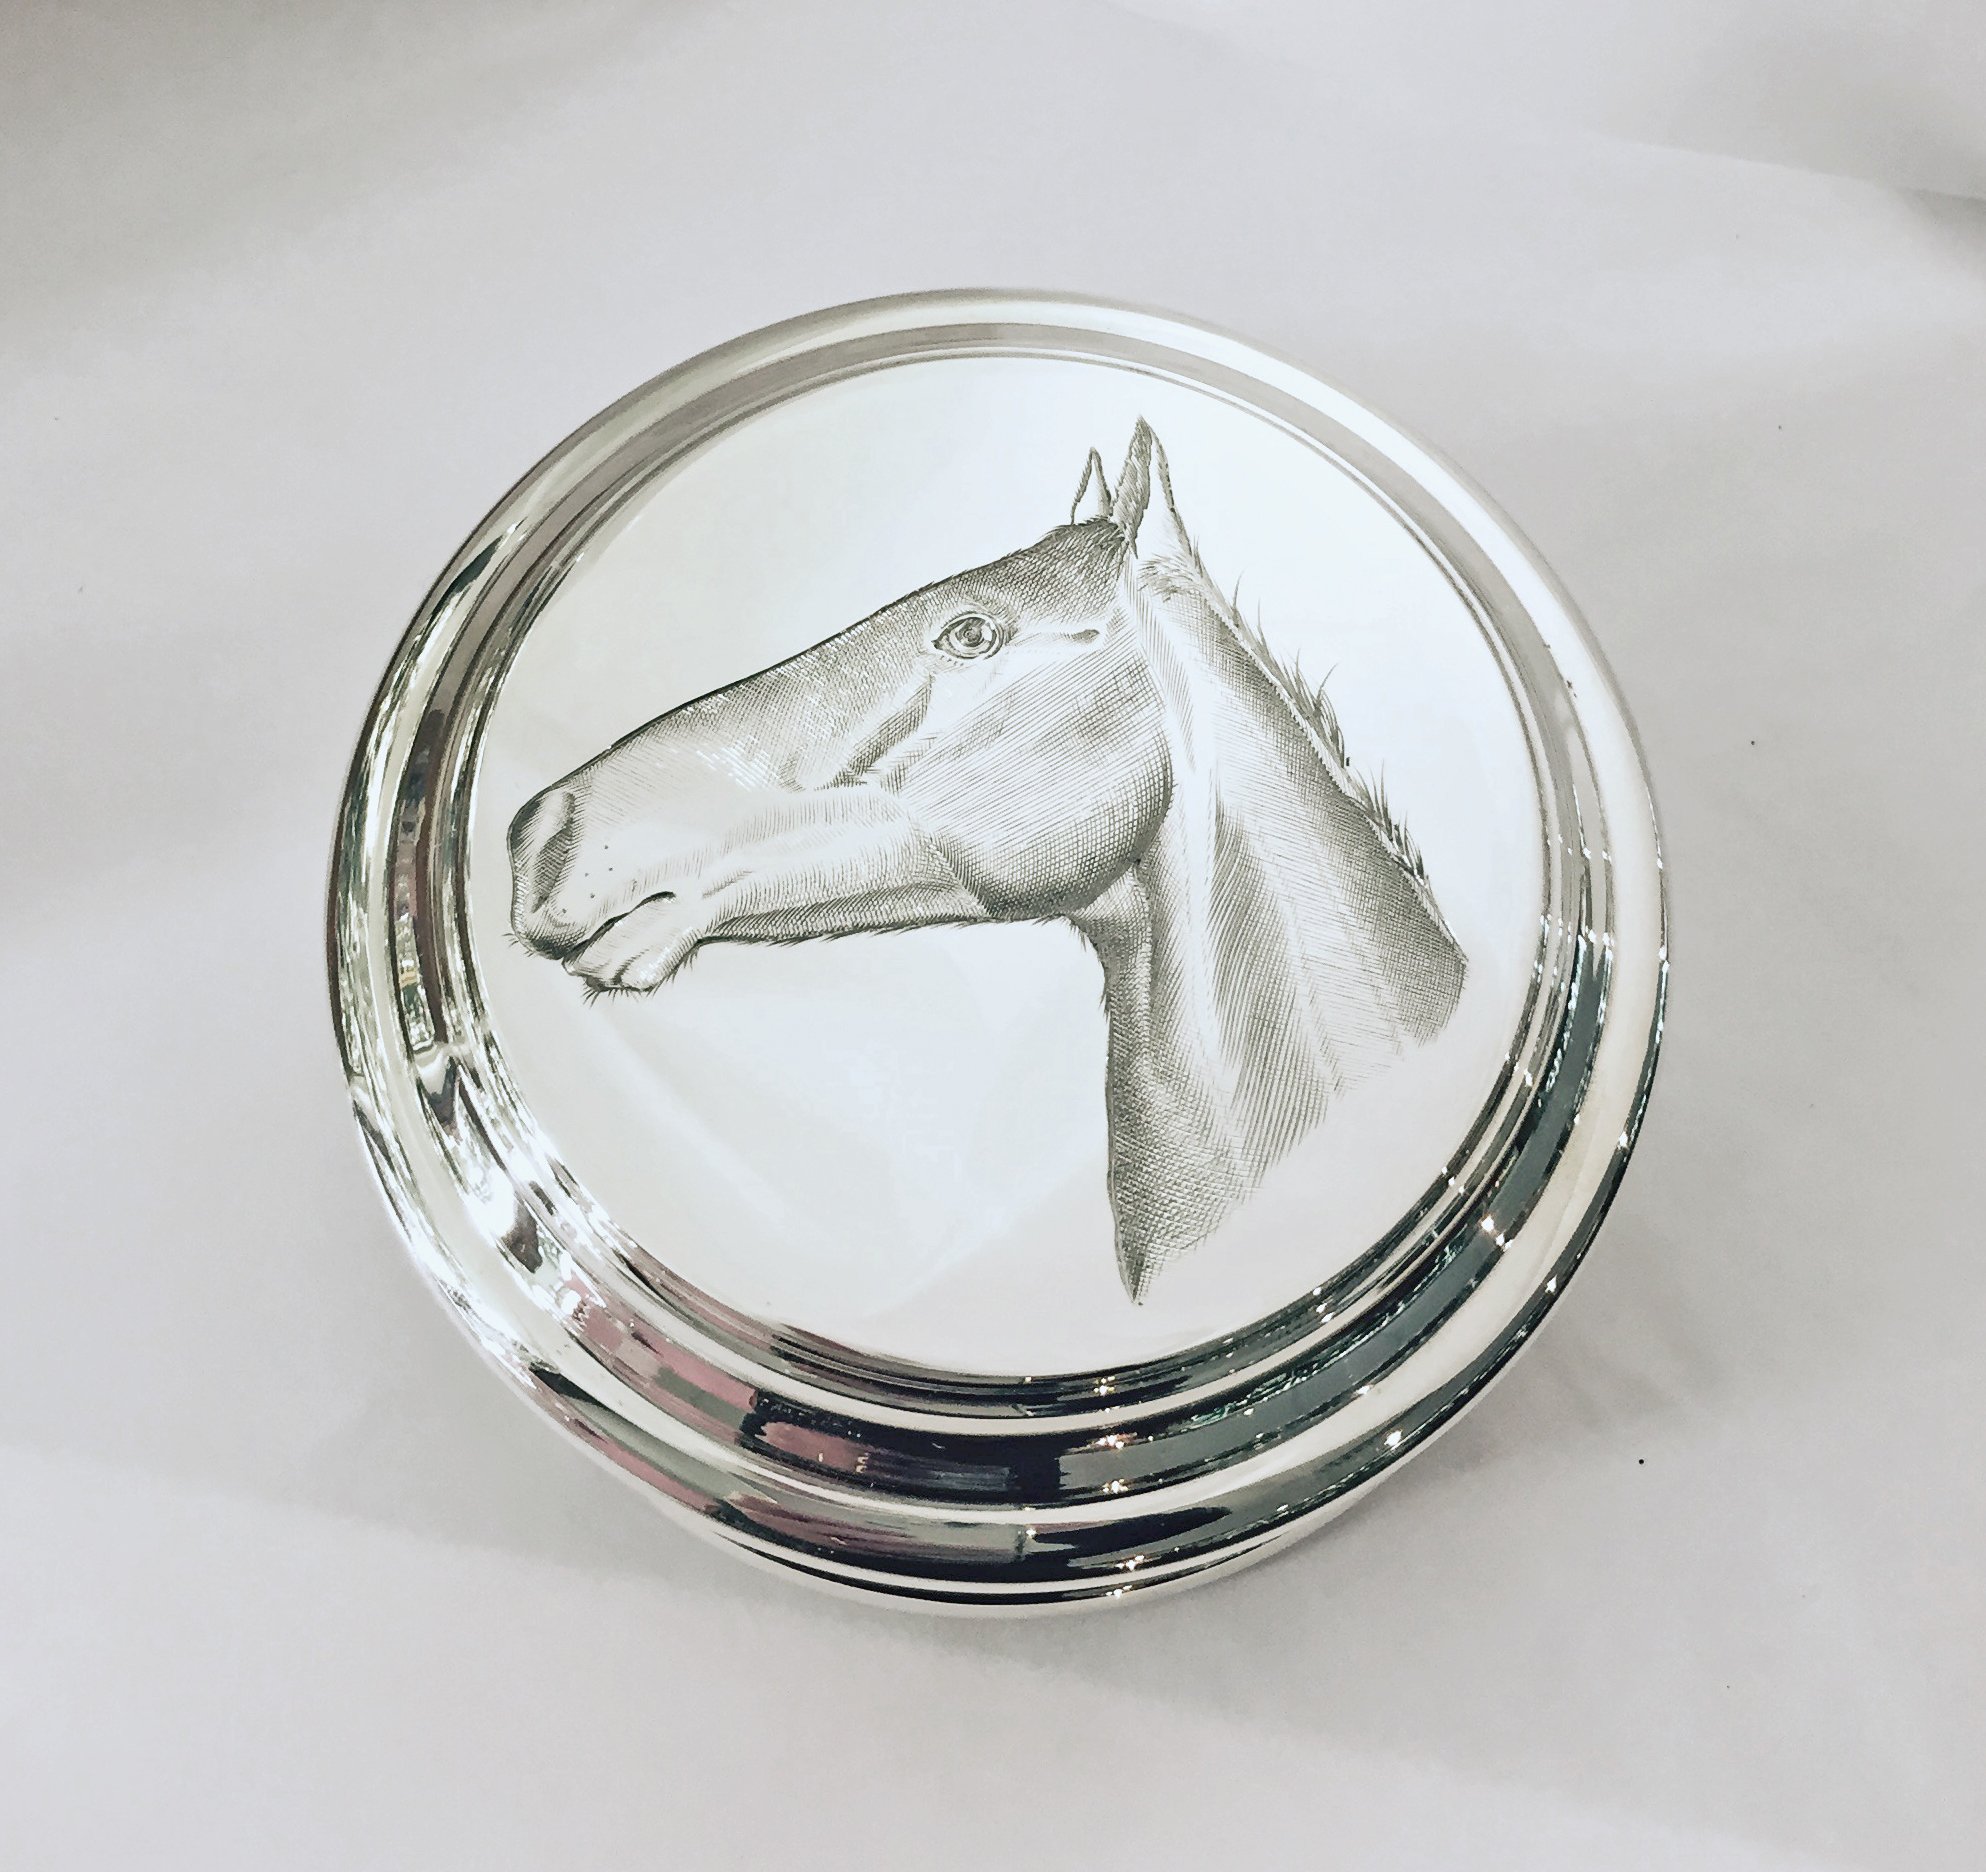 Engraved silver trinket box